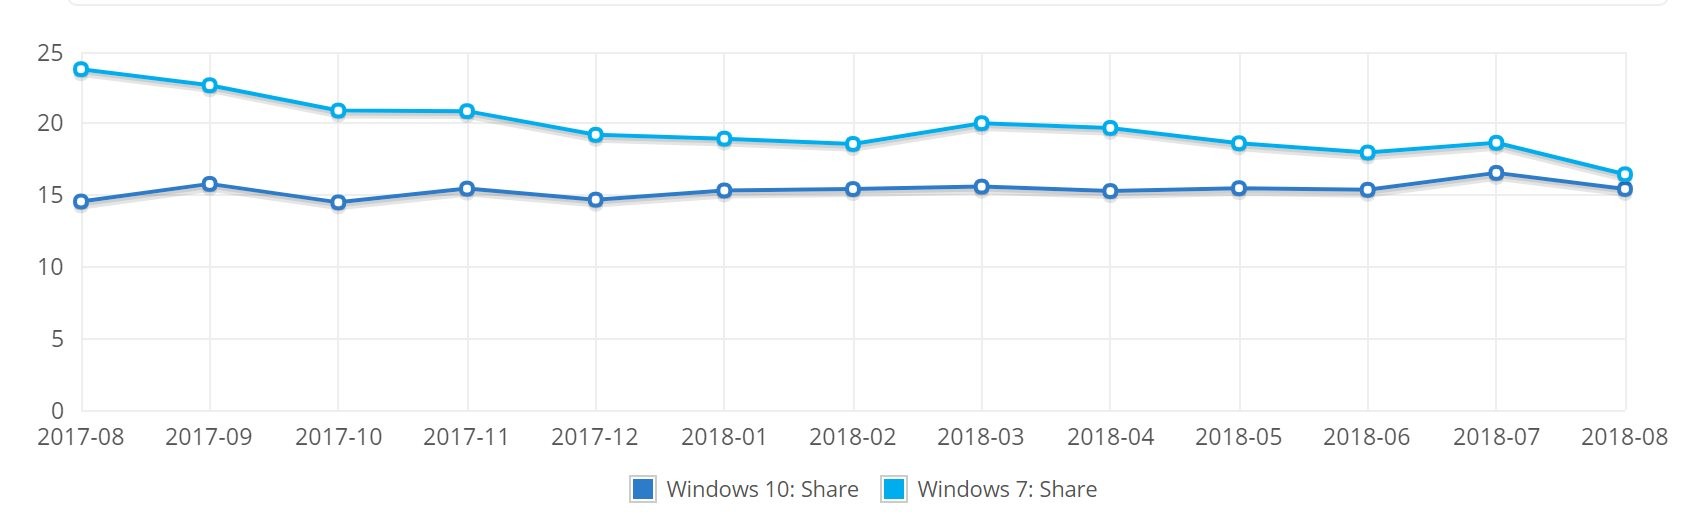 2017-10 windows 7 update